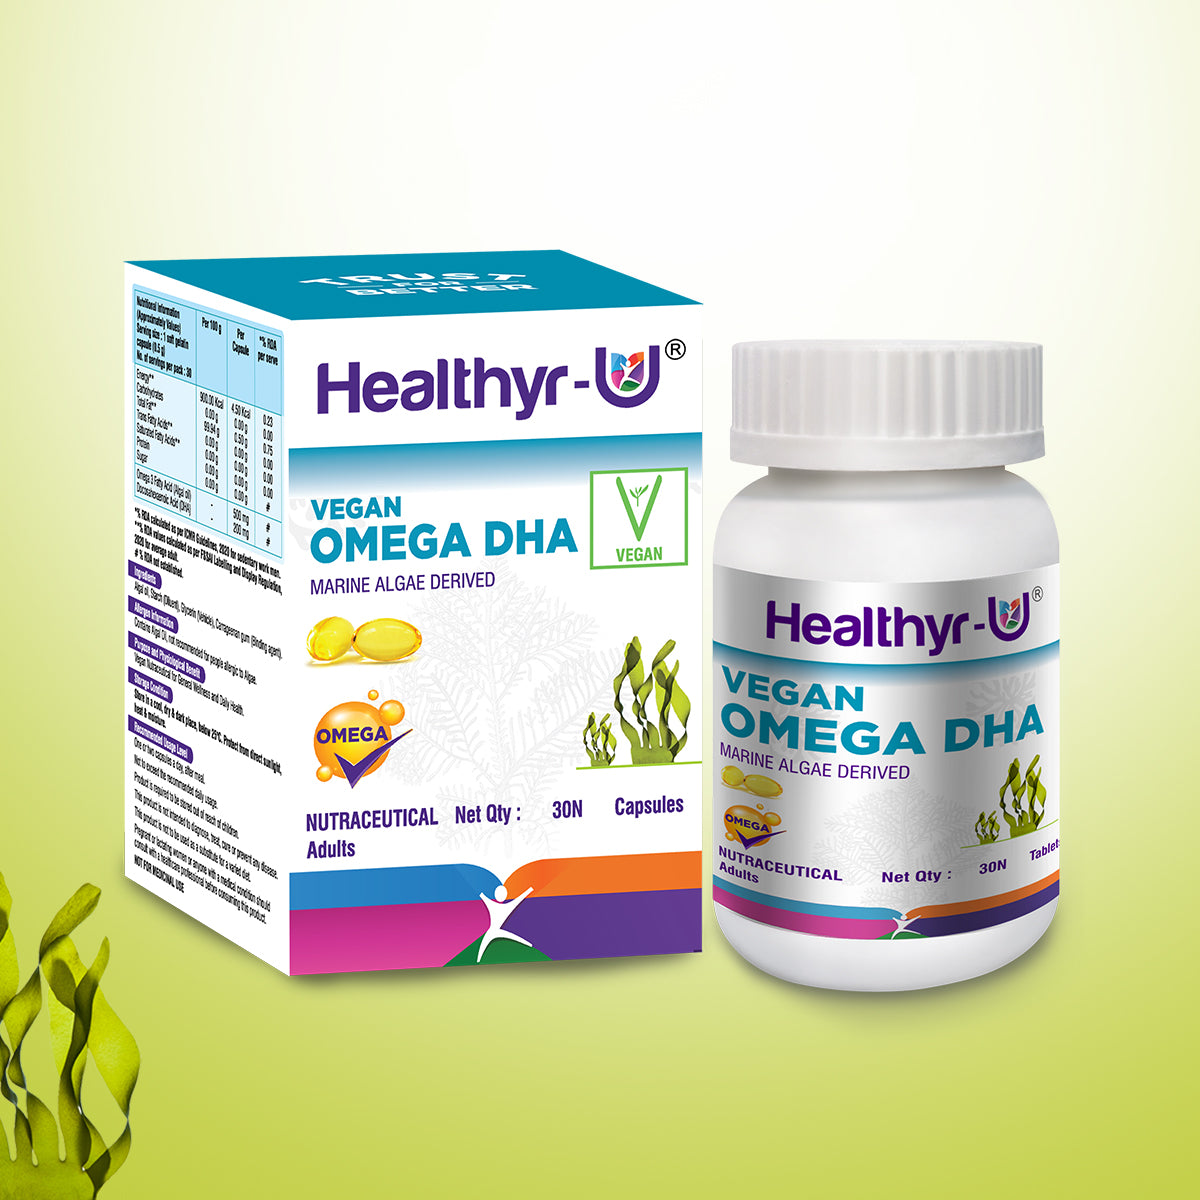 Vegan-Omega-DHA-Healthyr-U-Omega-3-Pack